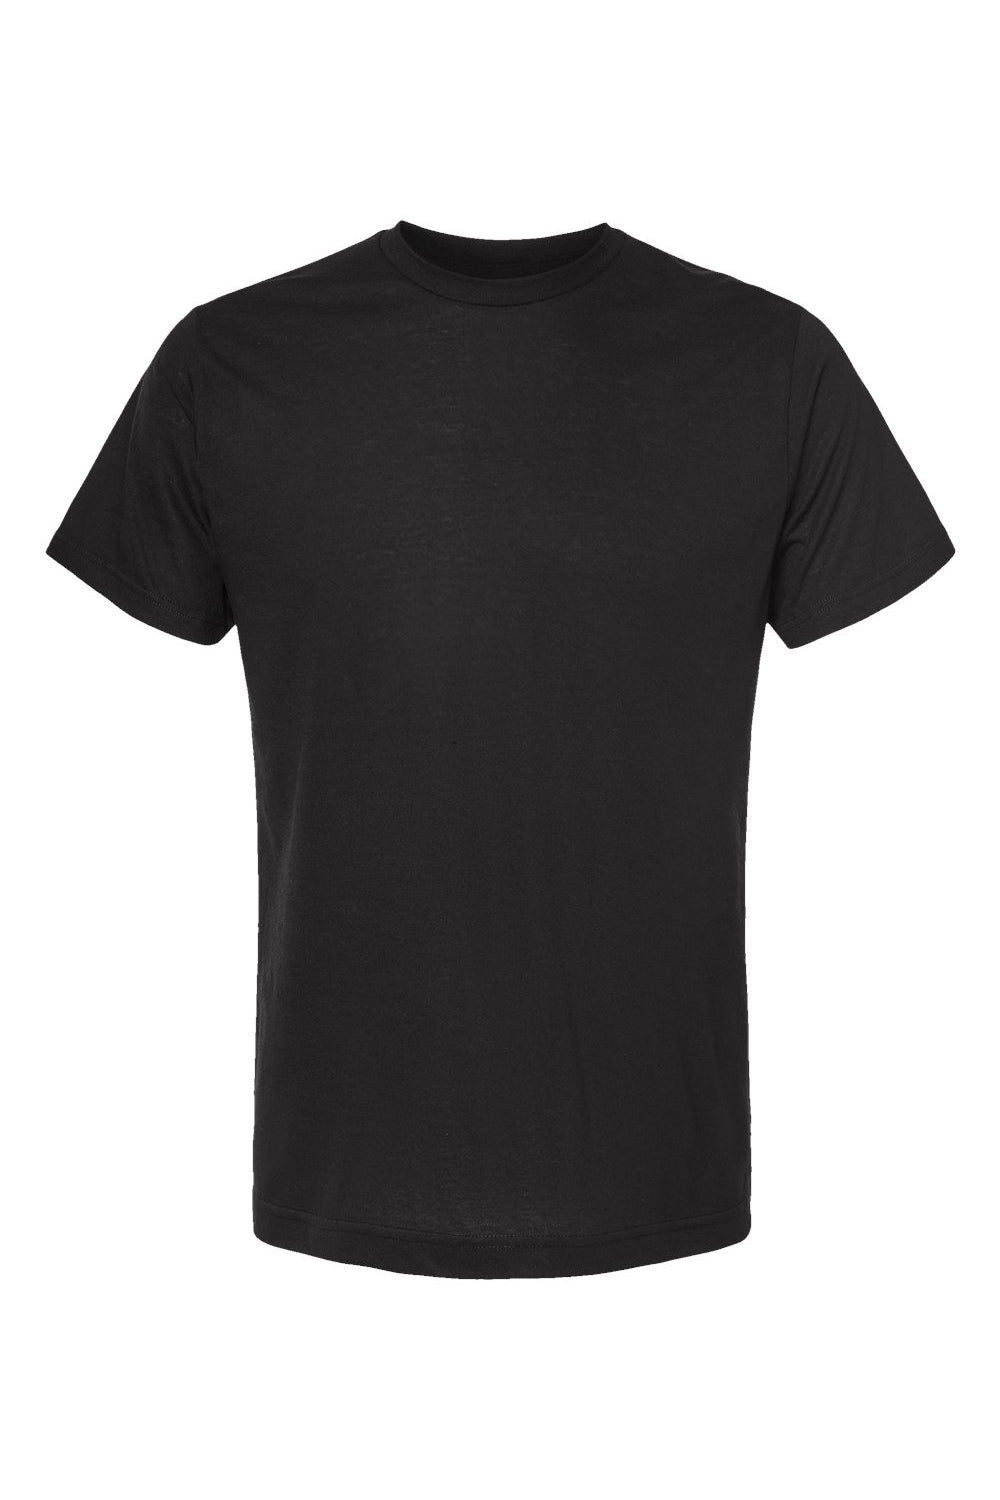 Tultex 241 Mens Poly-Rich Short Sleeve Crewneck T-Shirt Black Flat Front